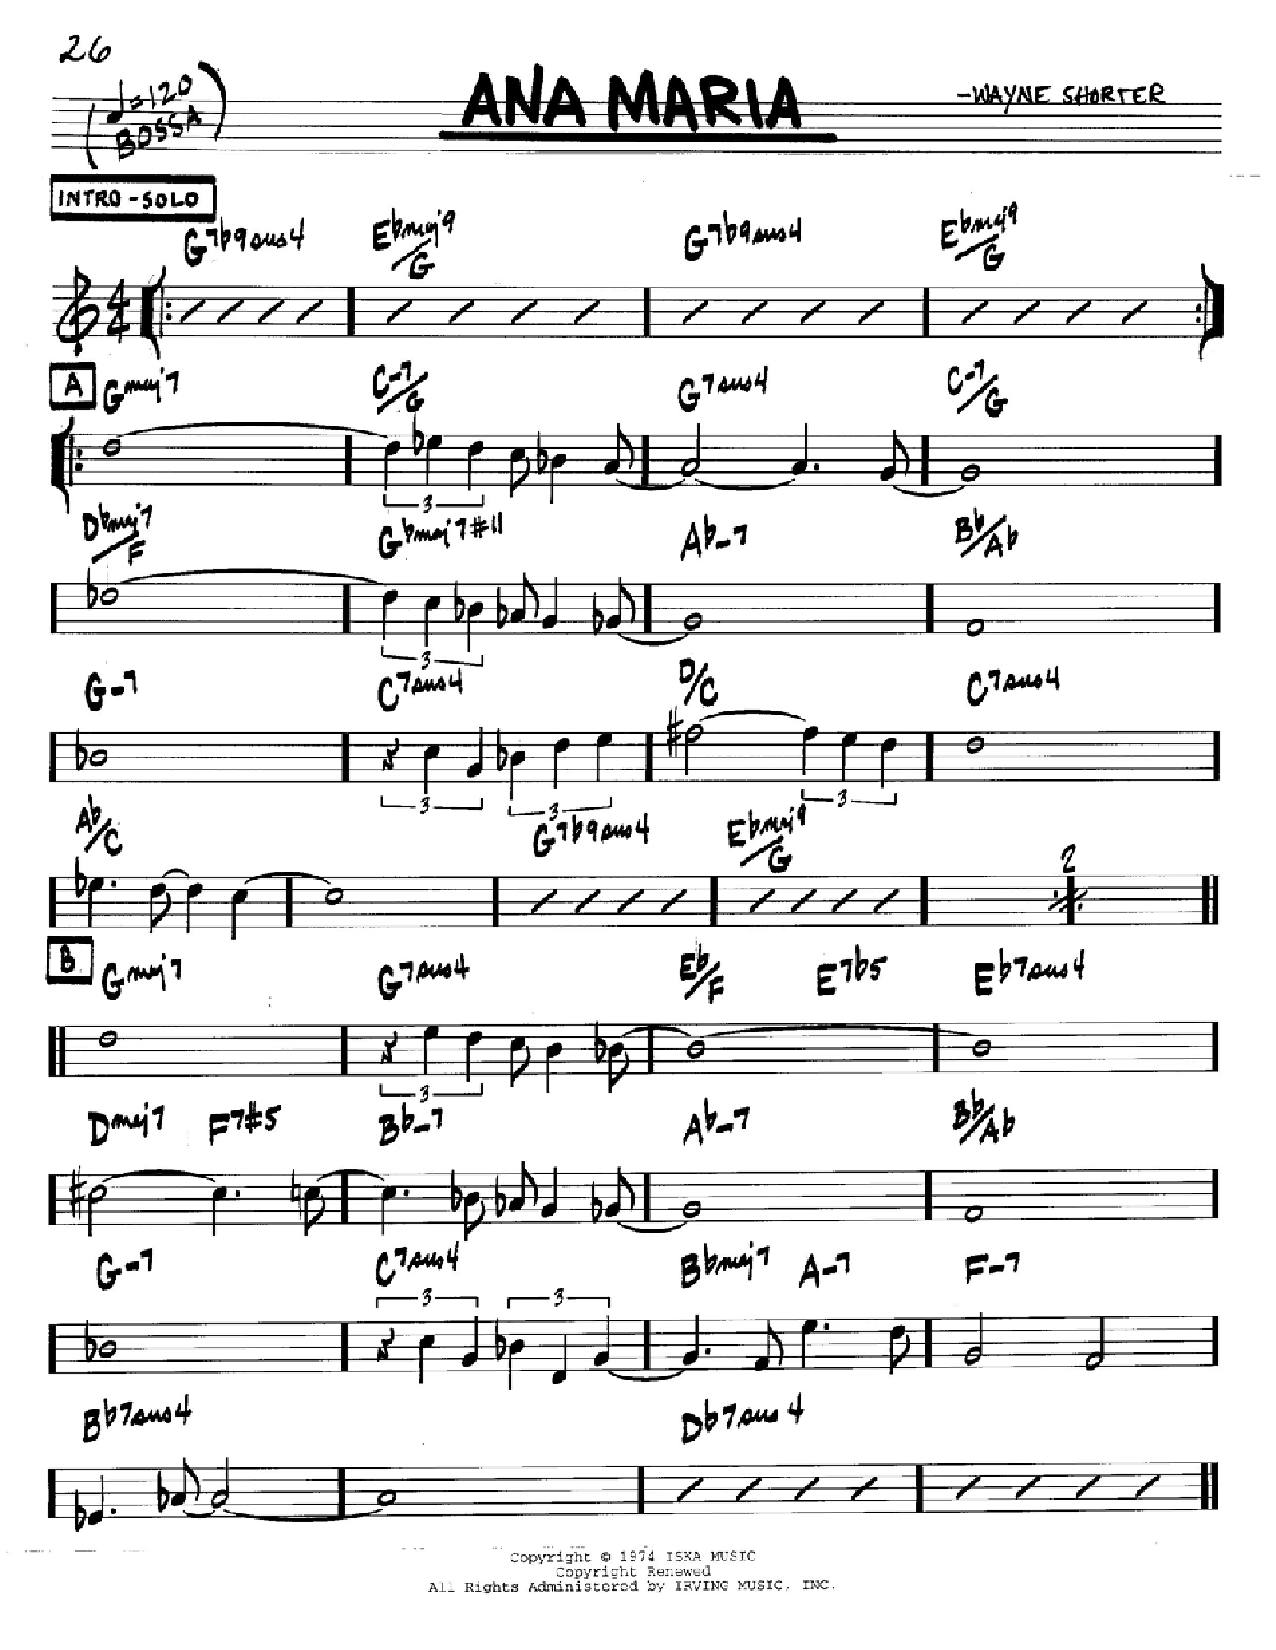 Wayne Shorter Ana Maria Sheet Music Notes & Chords for Real Book - Melody & Chords - Bb Instruments - Download or Print PDF